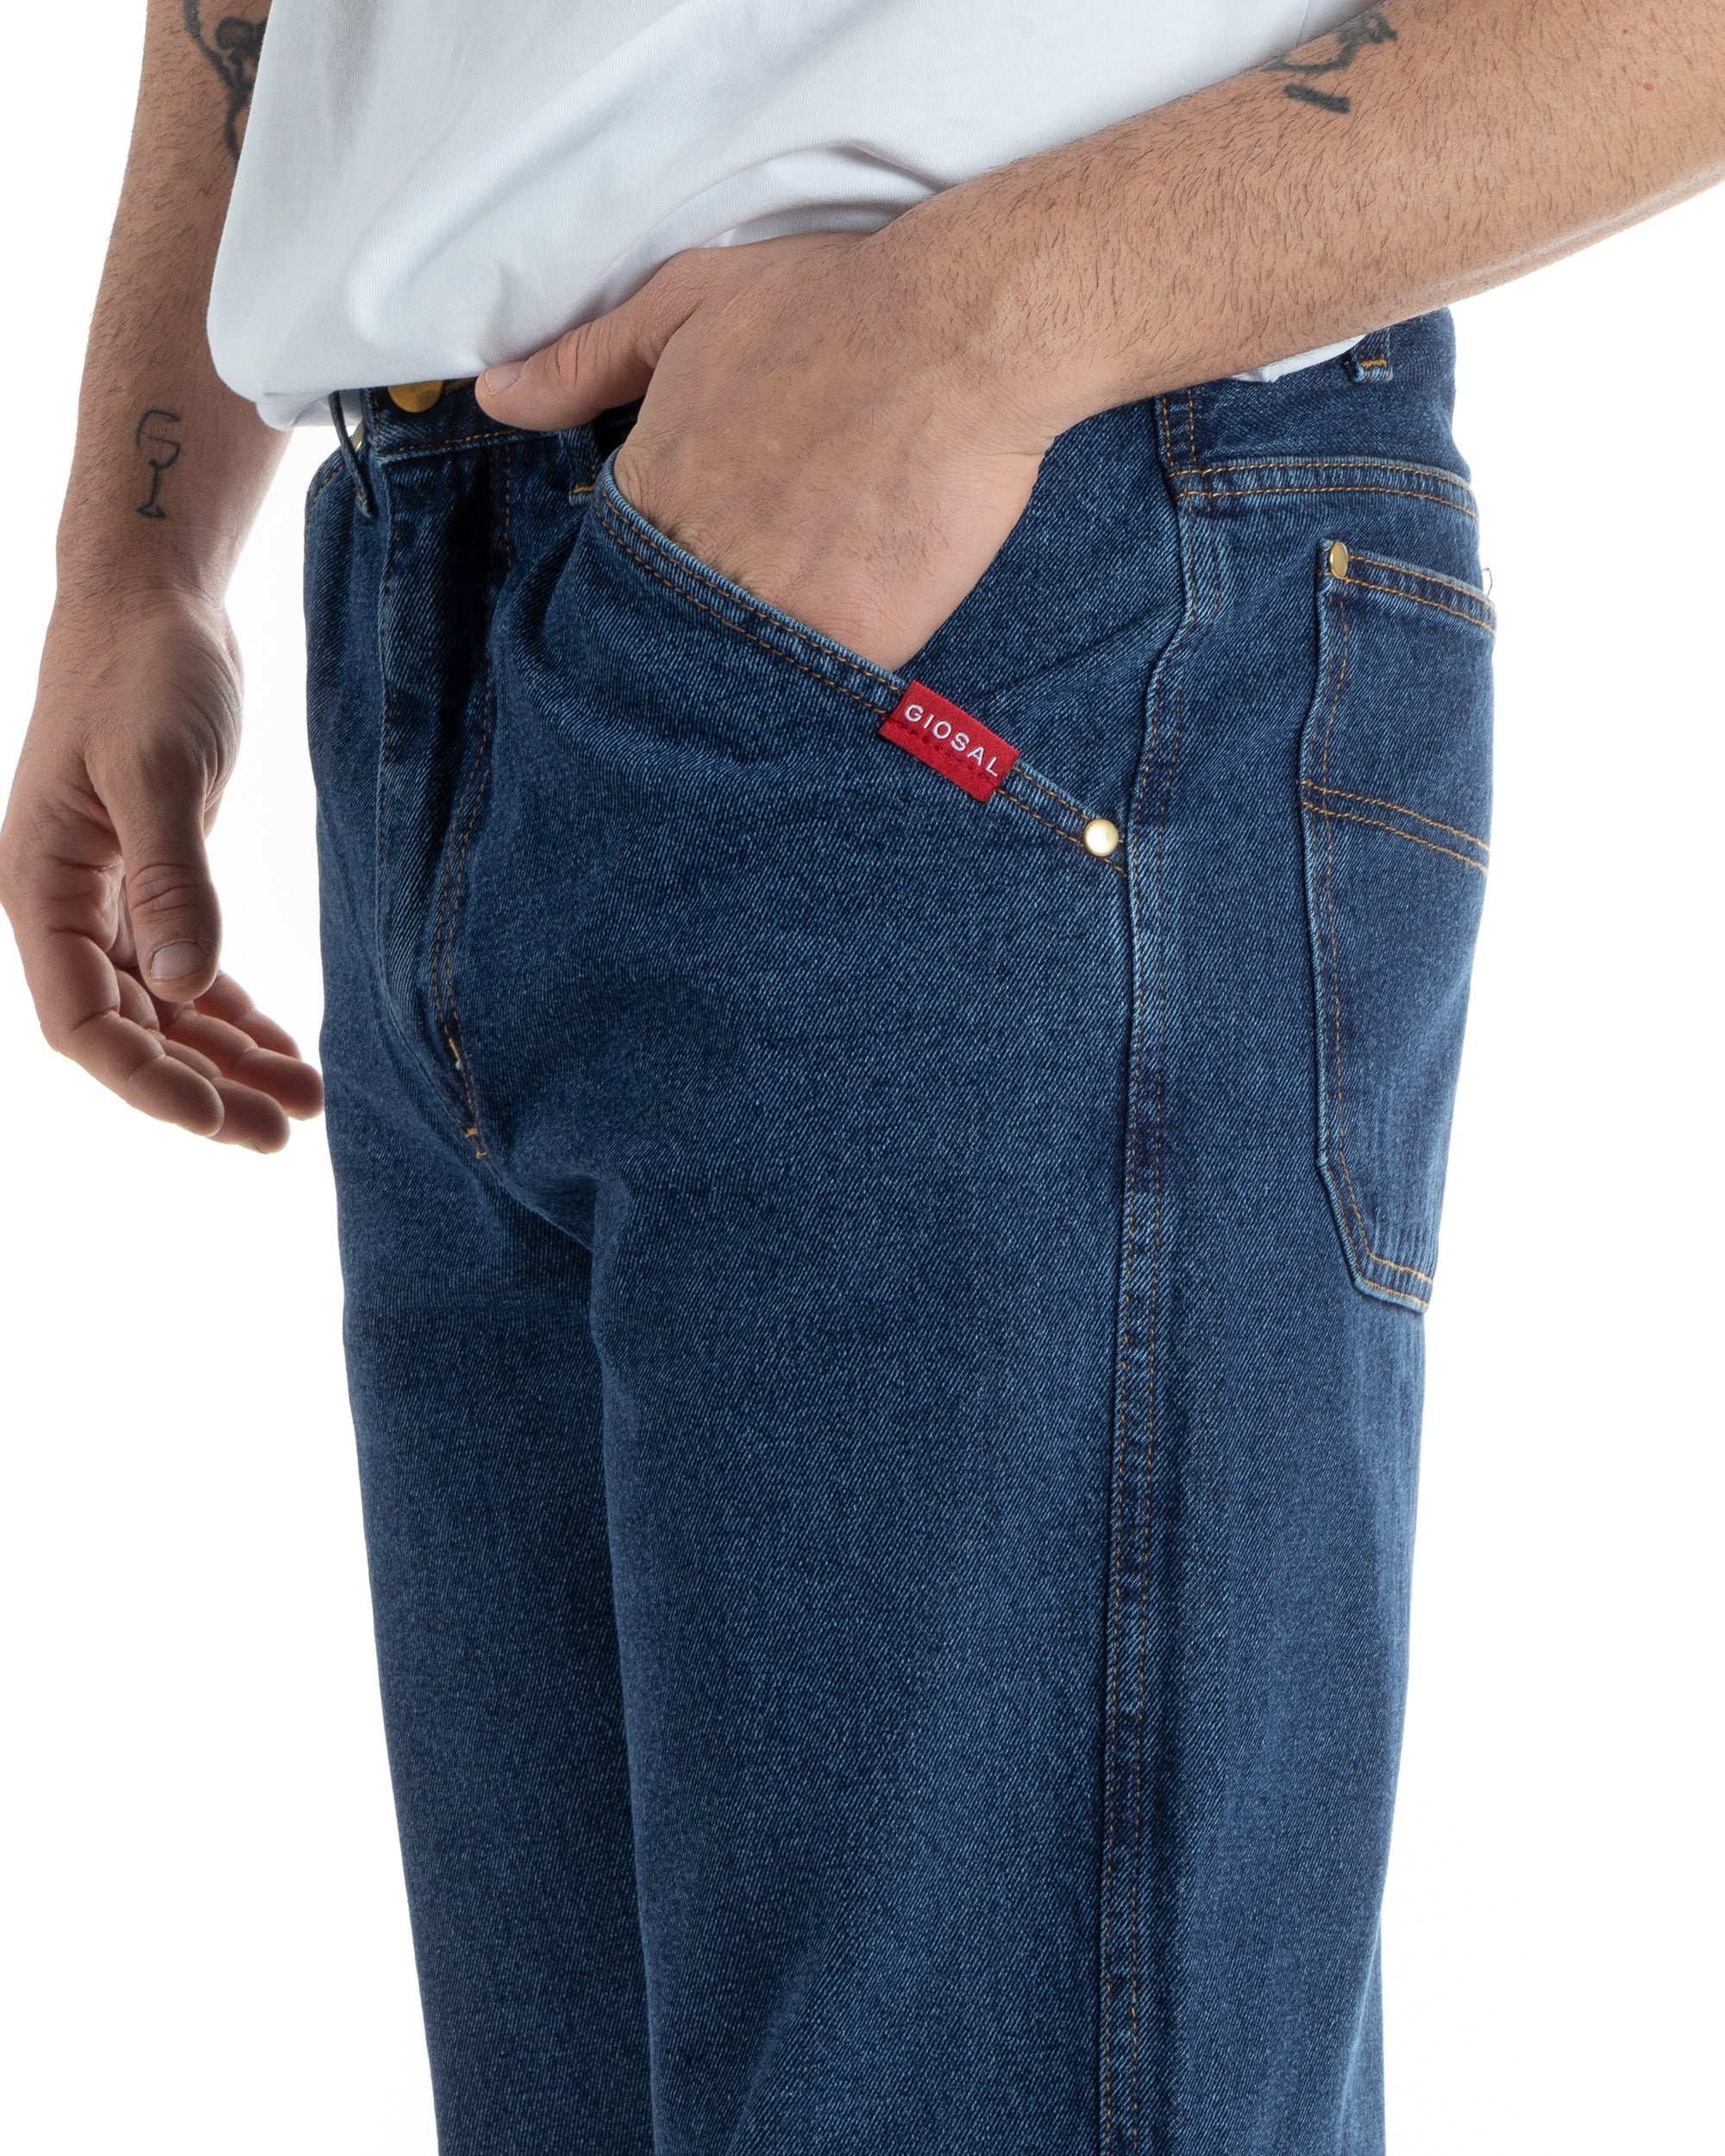 Pantaloni Jeans Uomo Baggy Fit Basic Denim Scuro GIOSAL-P5990A